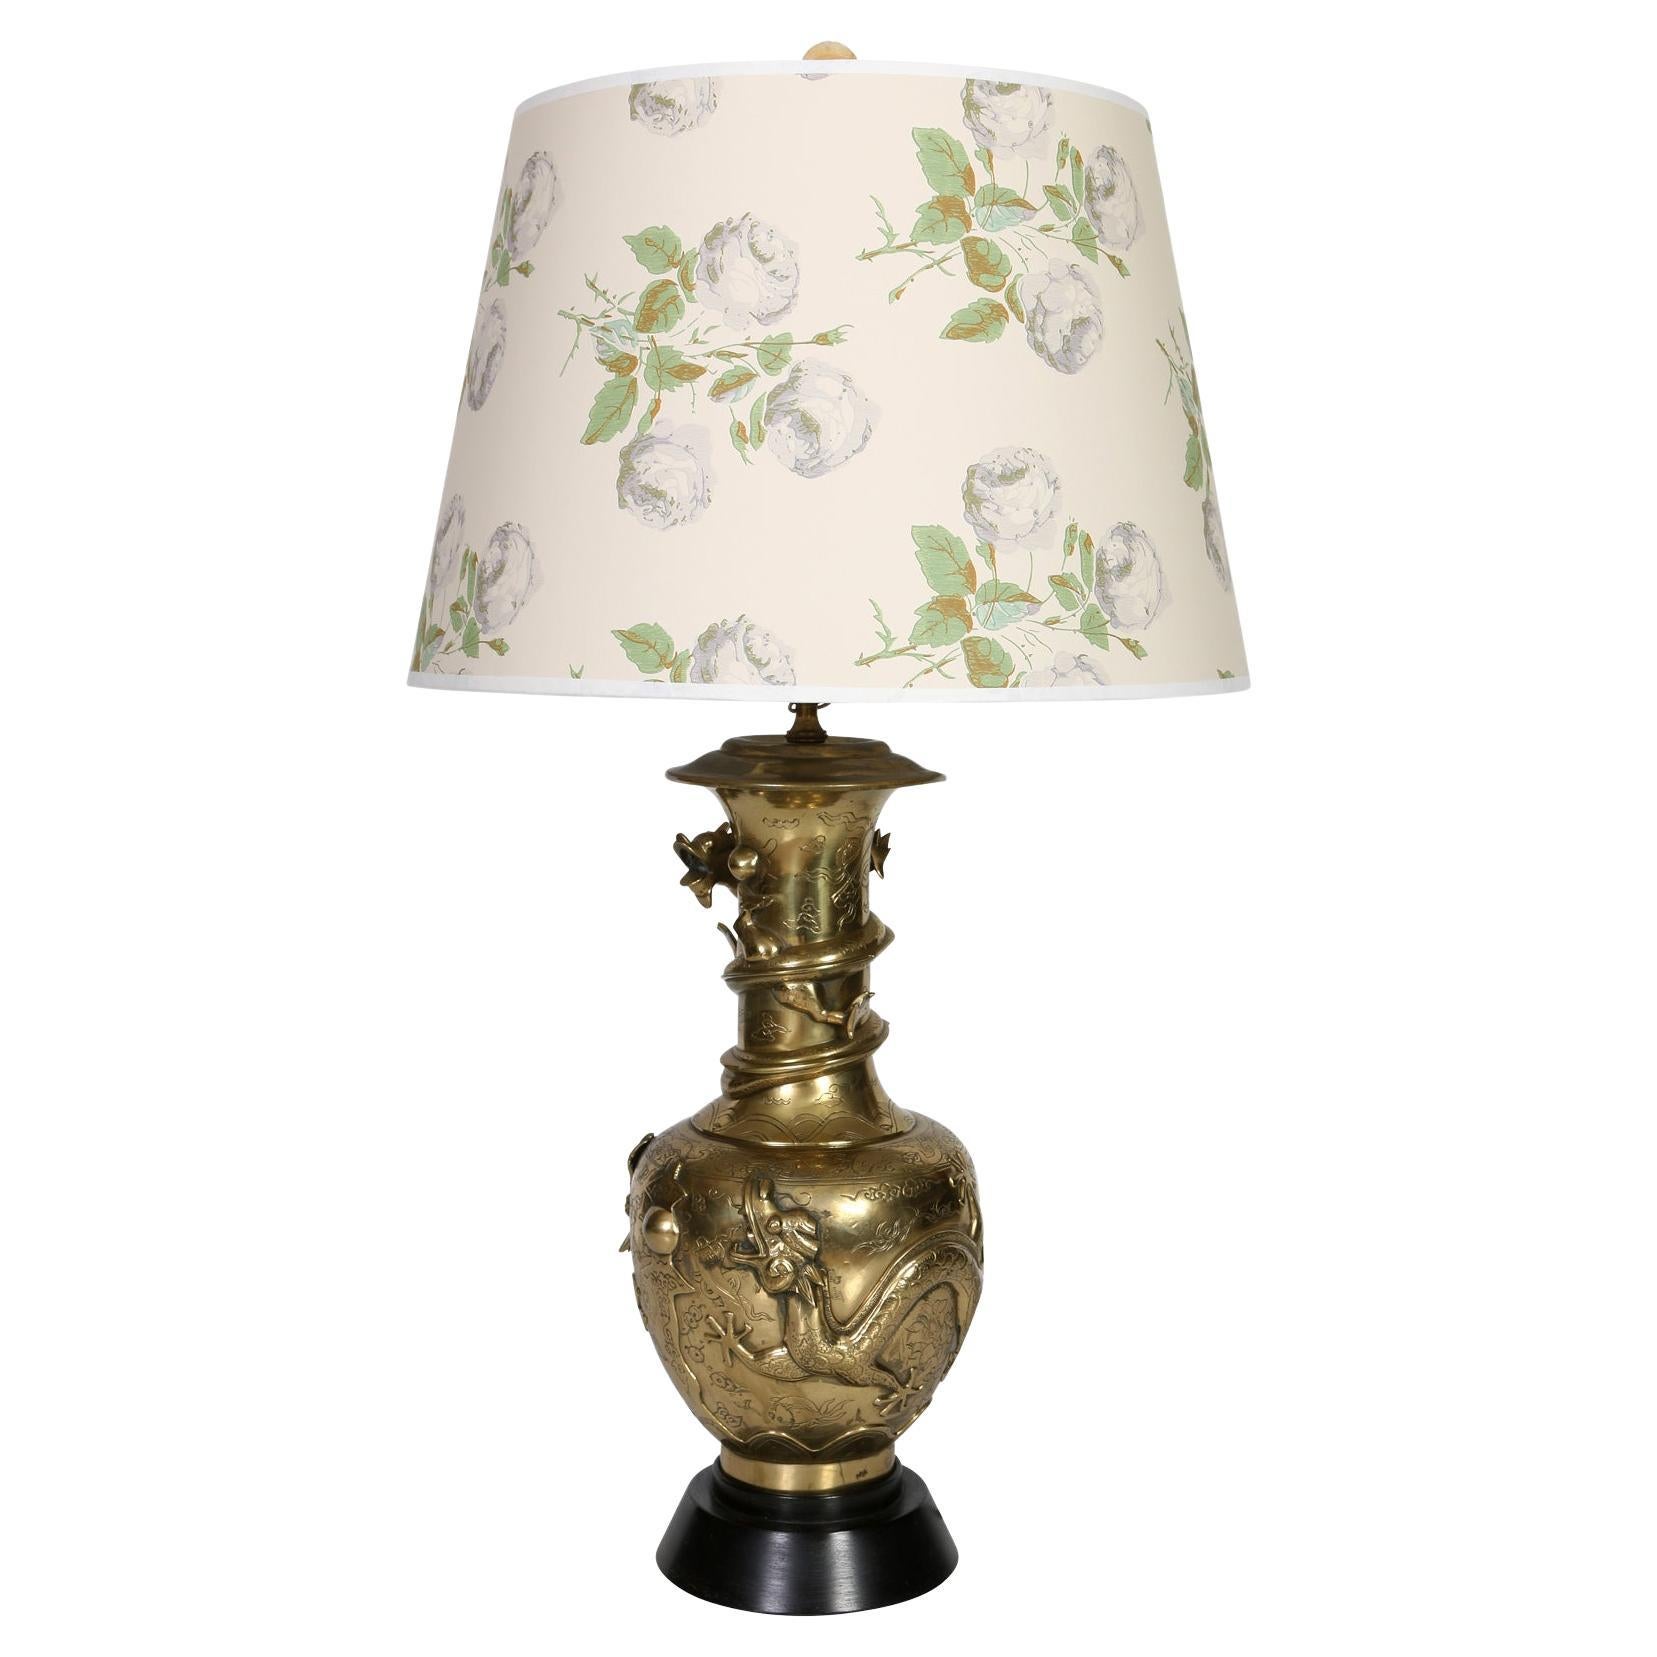 Bronzelampe im Vintage-Stil mit erhabenem Drachenmotiv im Angebot